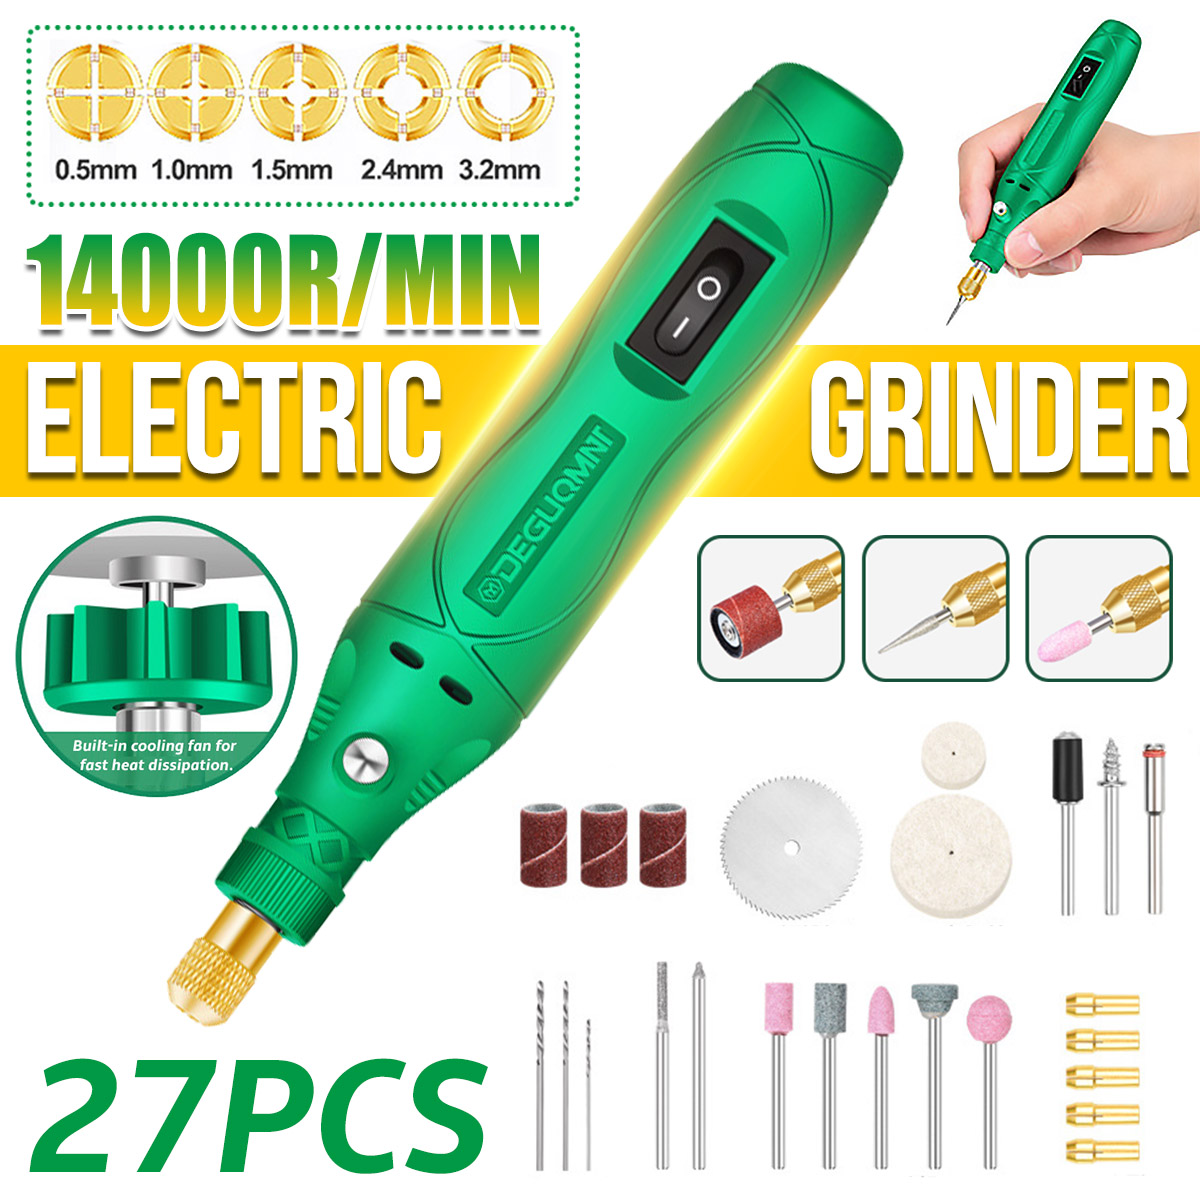 14000rmin-Electric-Grinding-Pen-Kit-Portable-Sanding-Grinding-Polishing-Engraving-Tool-For-Wood-Stai-1833054-1